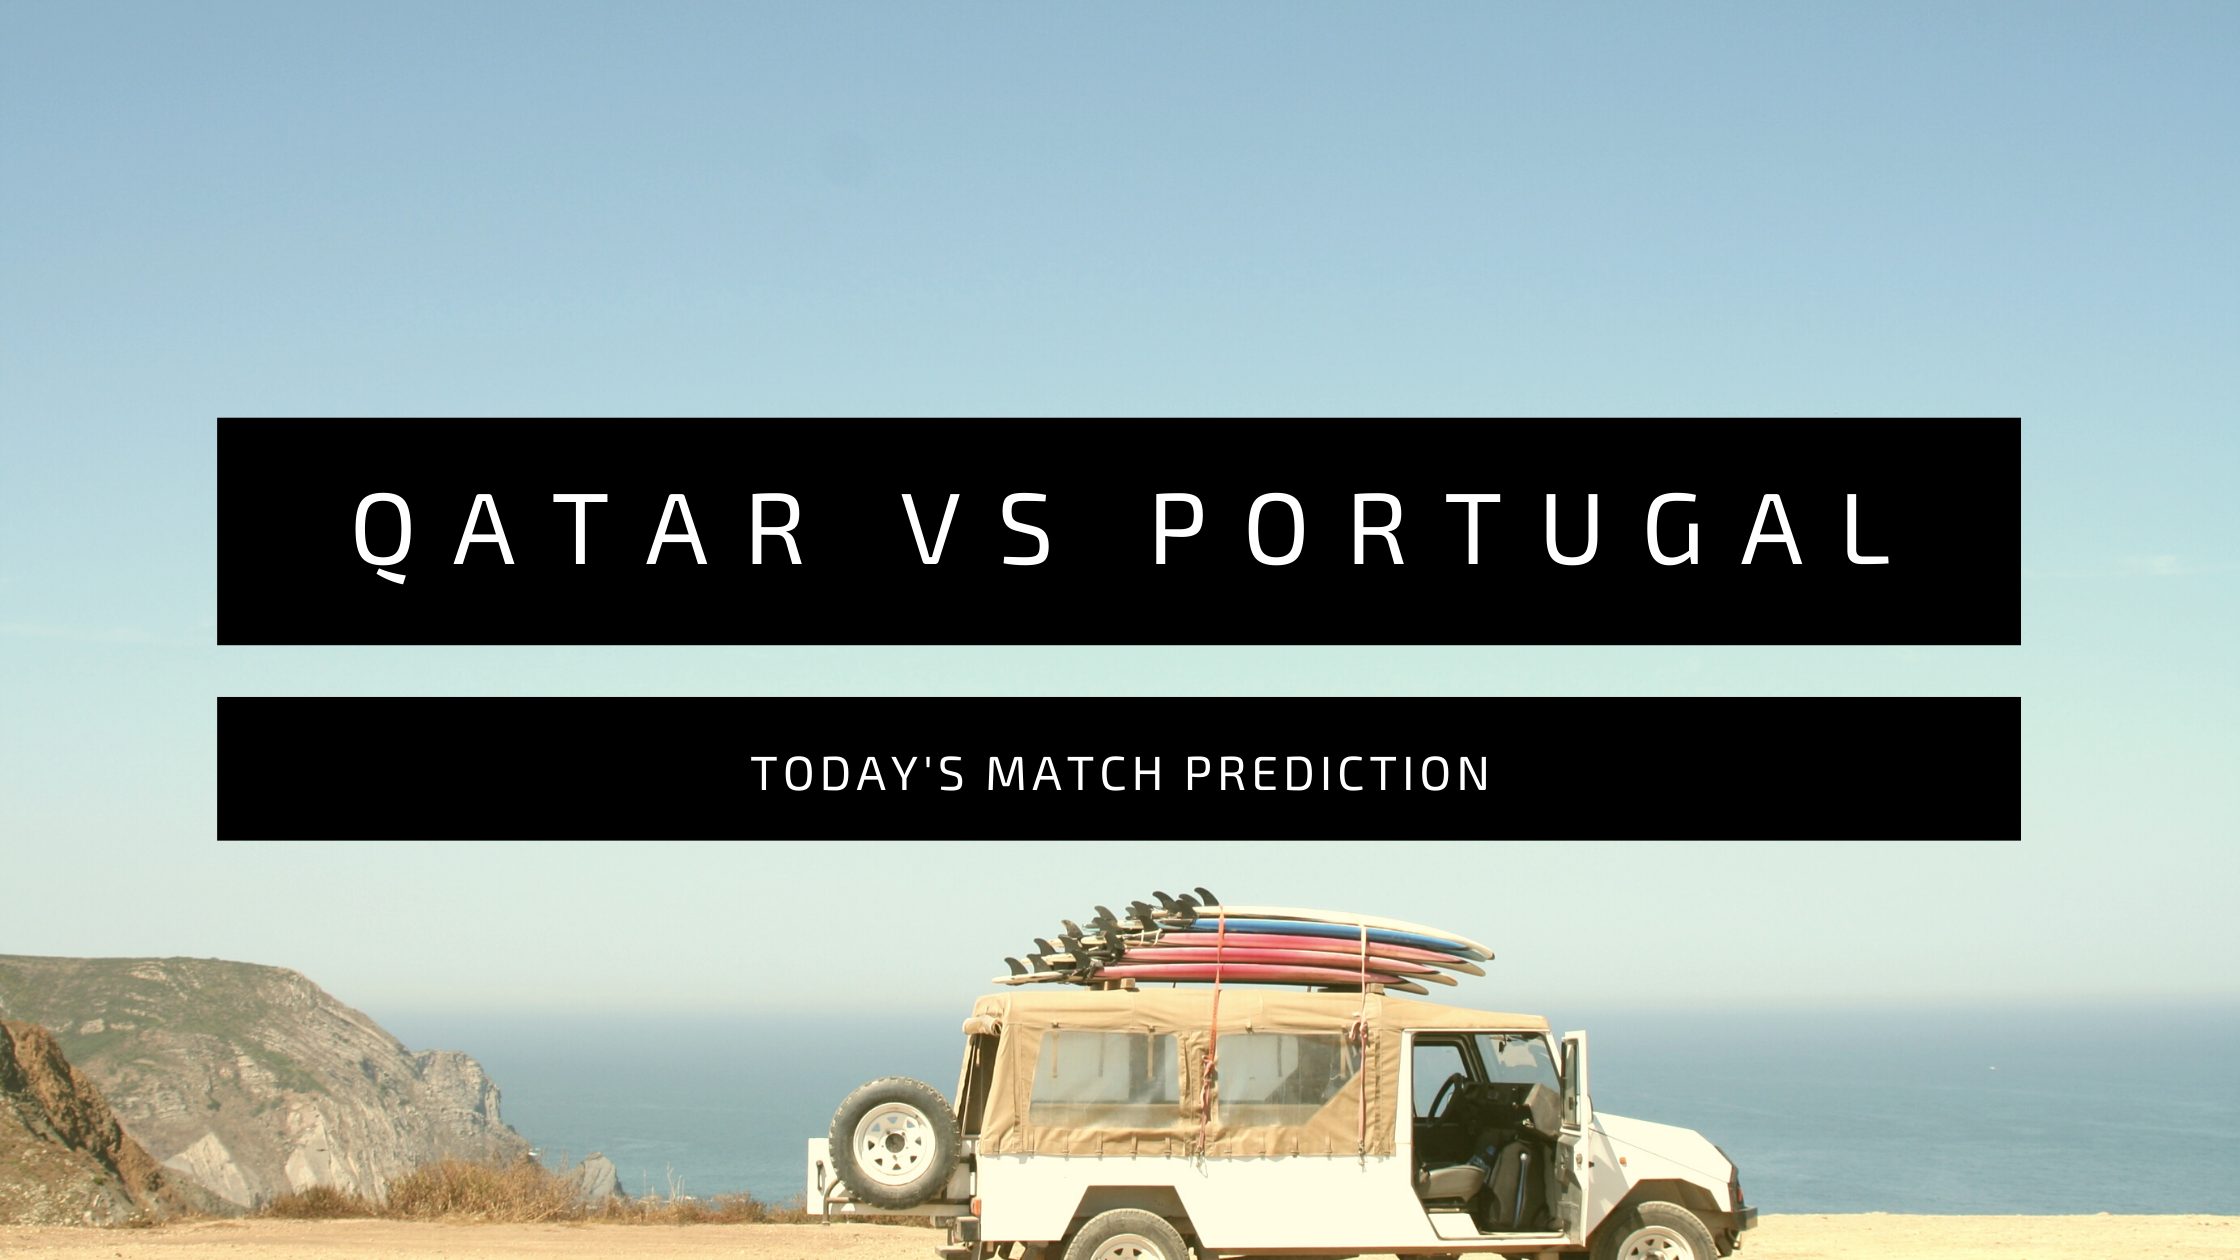 Qatar vs Portugal match prediction